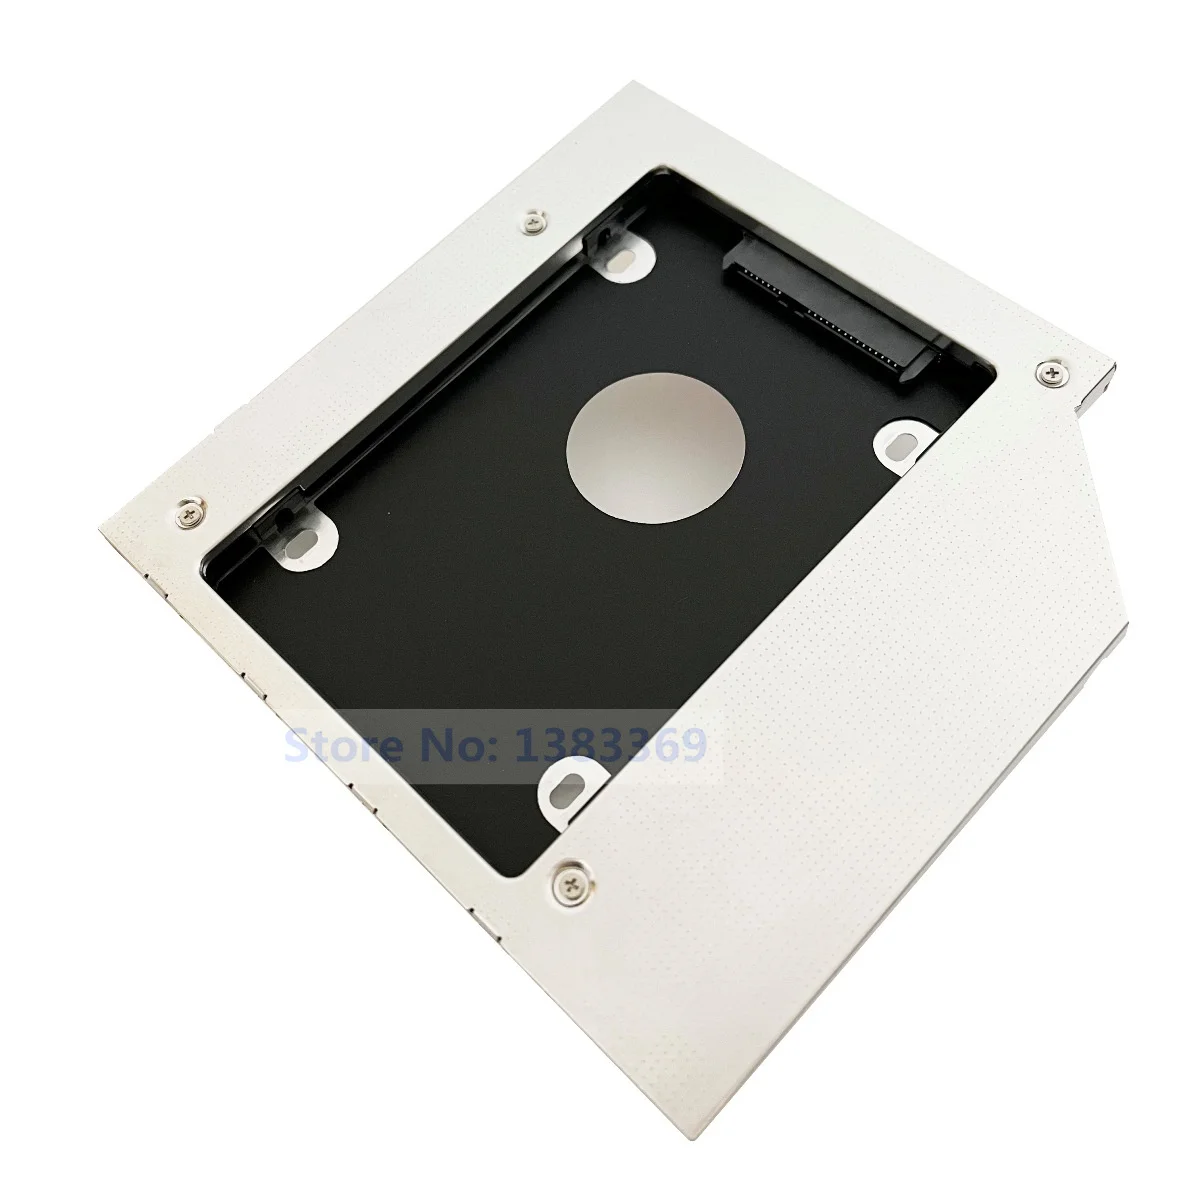 

NIGUDEYANG 2nd SATA Hard Drive HDD SSD Enclosure Optical Bay Caddy Frame Bracket for Lenovo G405s G500s G505s G510s UJ8C2 UJ8DB